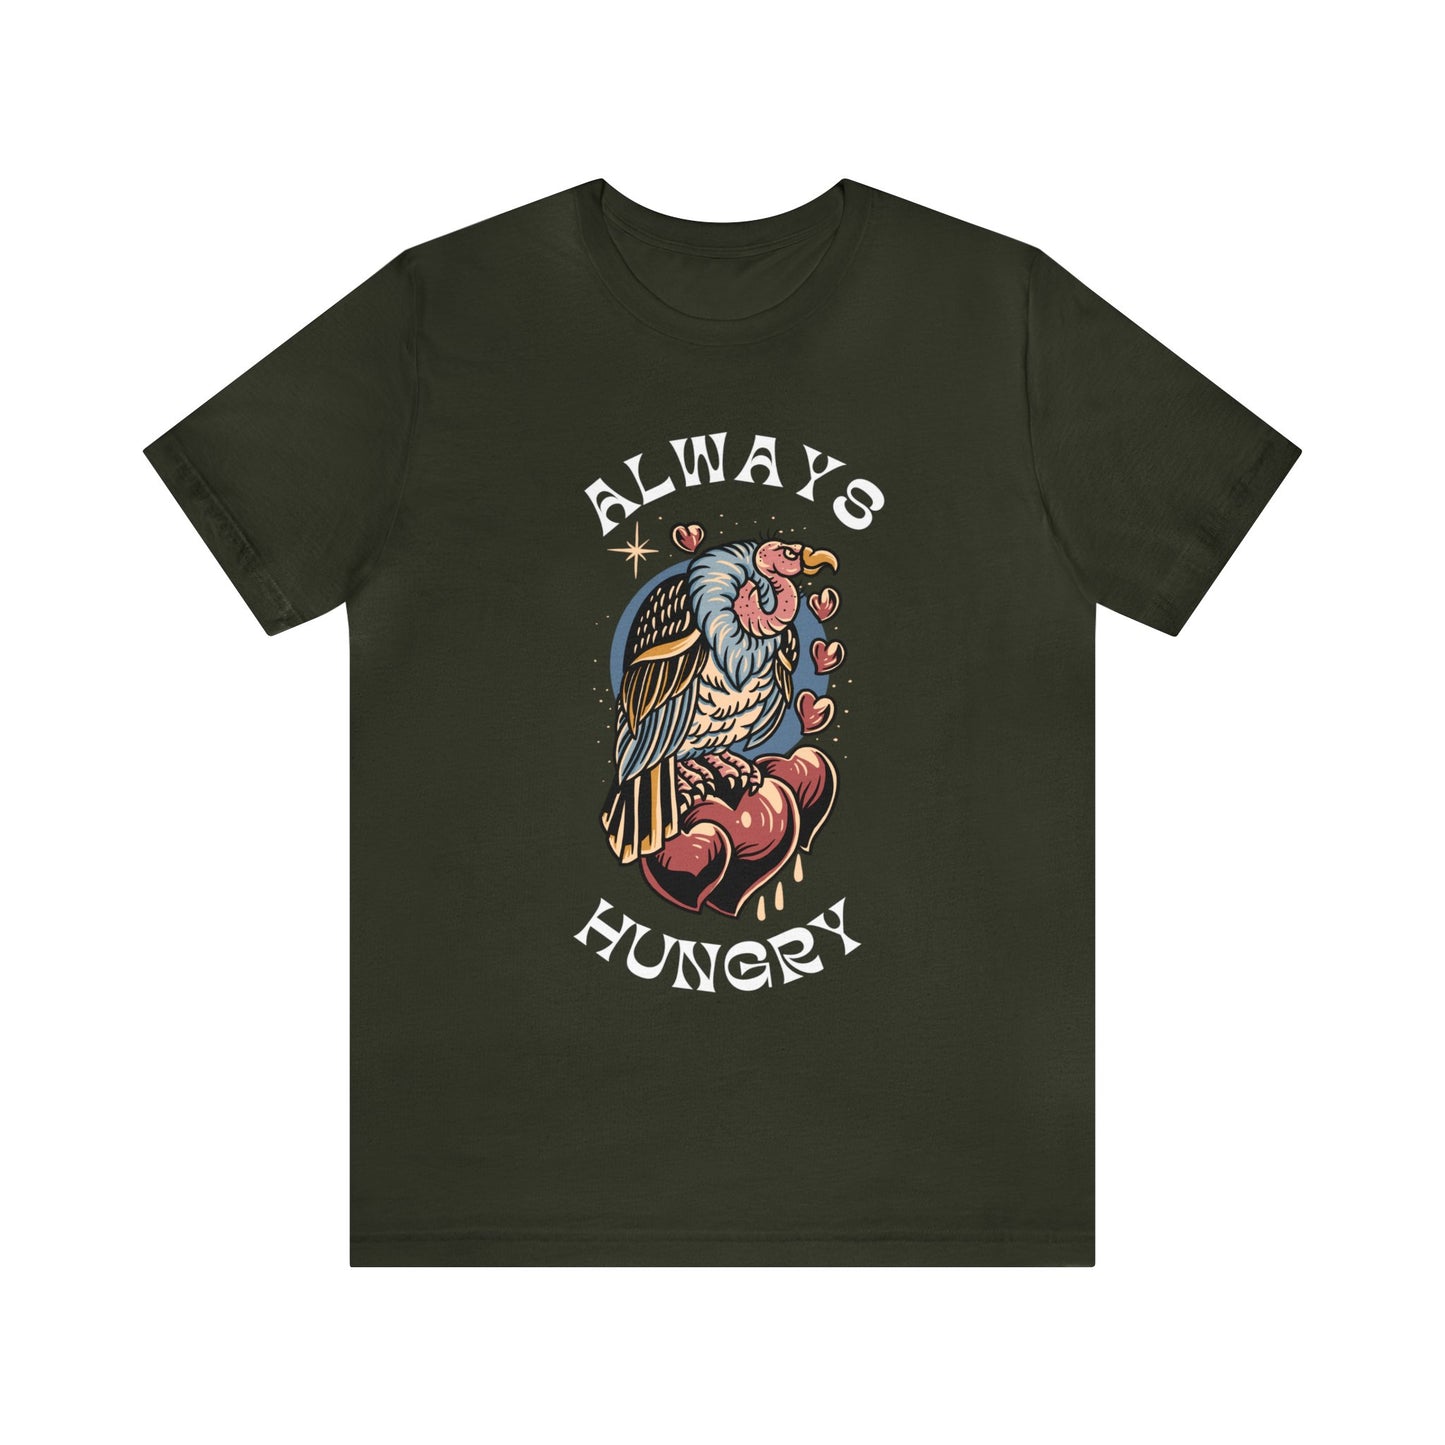 Always Hungry Vulture Hearts Tattoo T-shirt / Dark Cloud Lightning Eye Unisex Traditional Tattoo Tee Shirt / Punk Rock Clothing Tshirt - Foxlark Crystal Jewelry